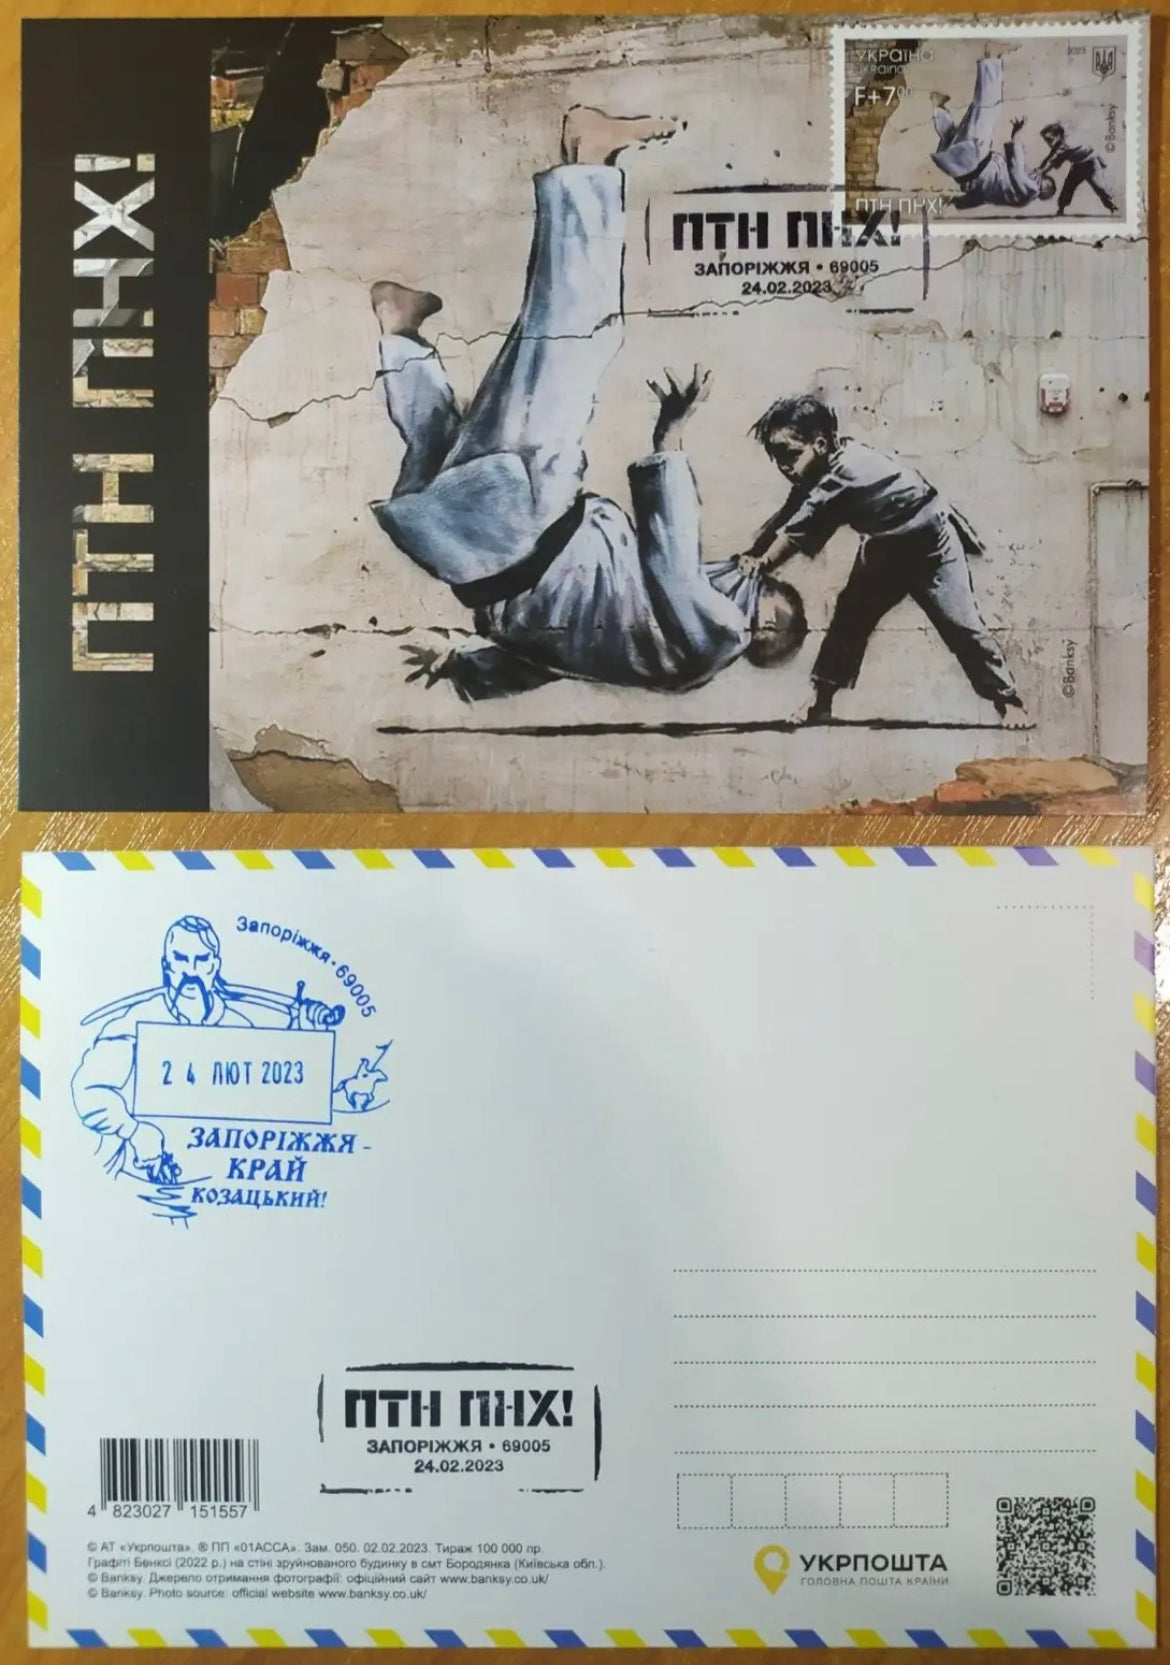 BANKSY "ПТН ПНХ!" Ukrainian stamps from Ukrposhta to support Ukrainians !!